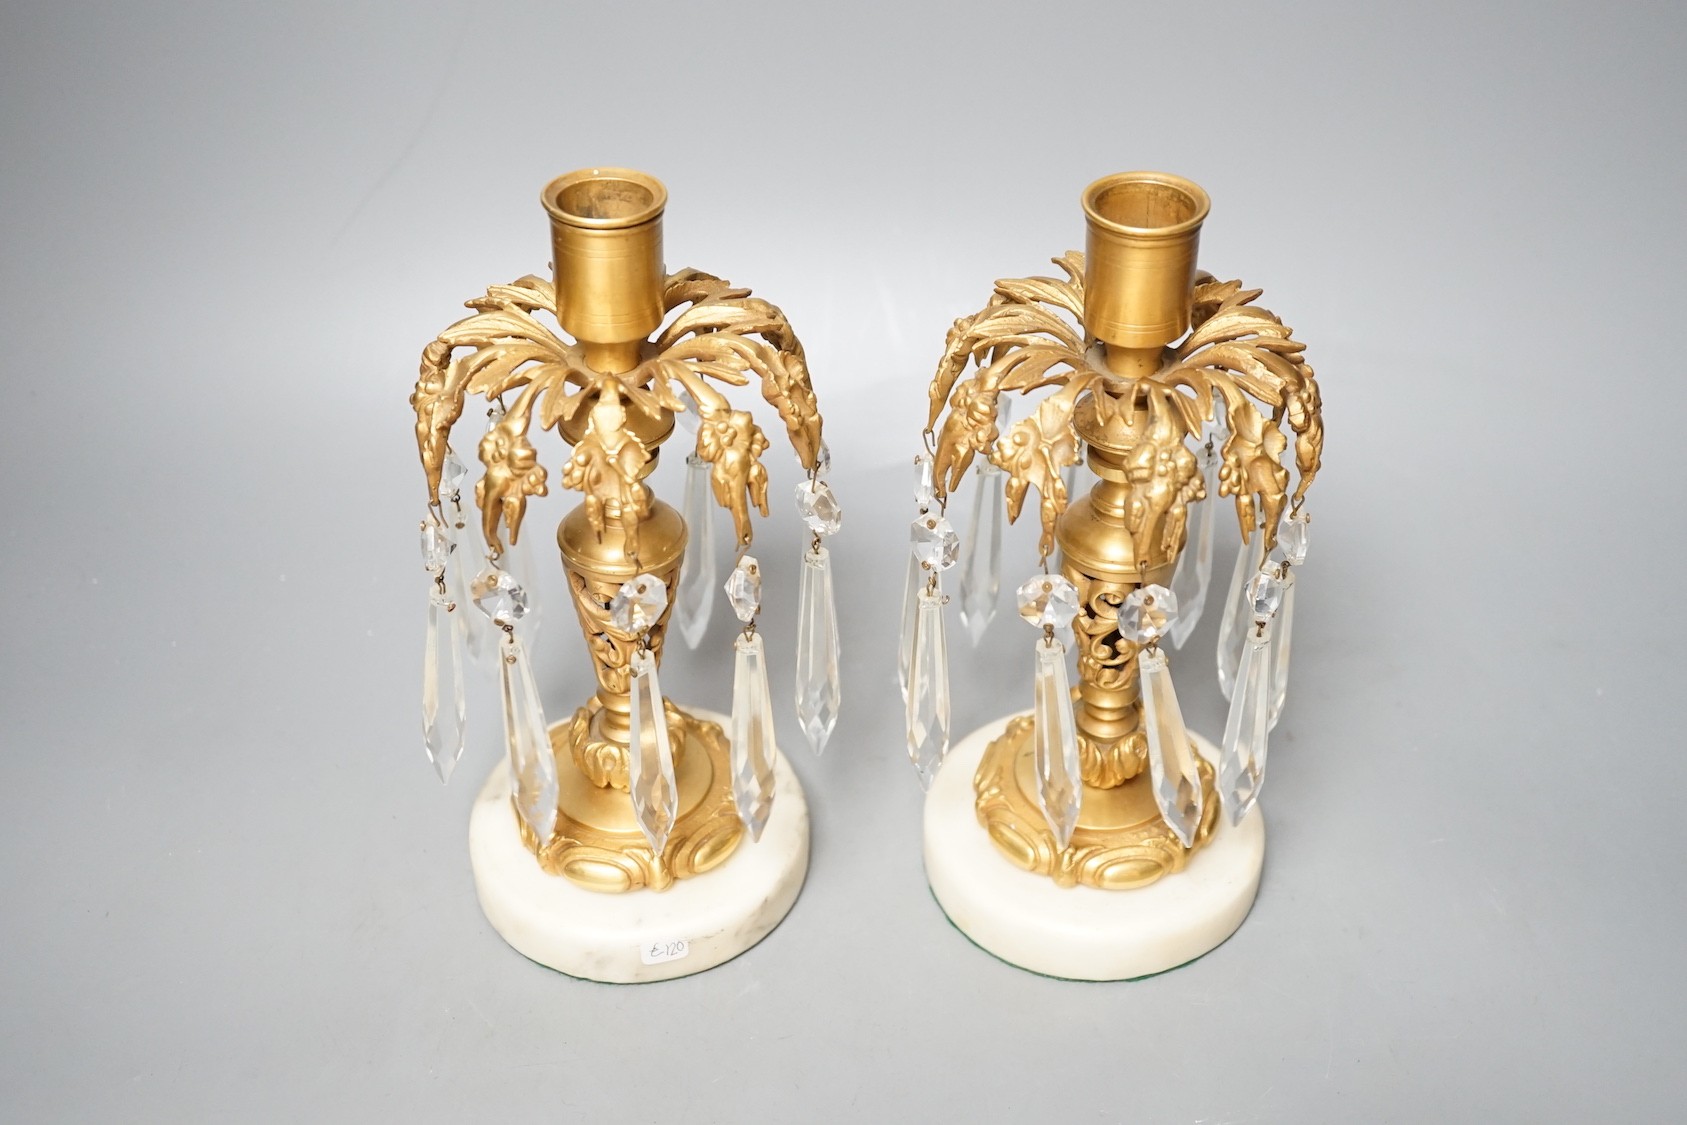 A pair of gilt metal and glass lustre drop candlesticks - 22cm tall